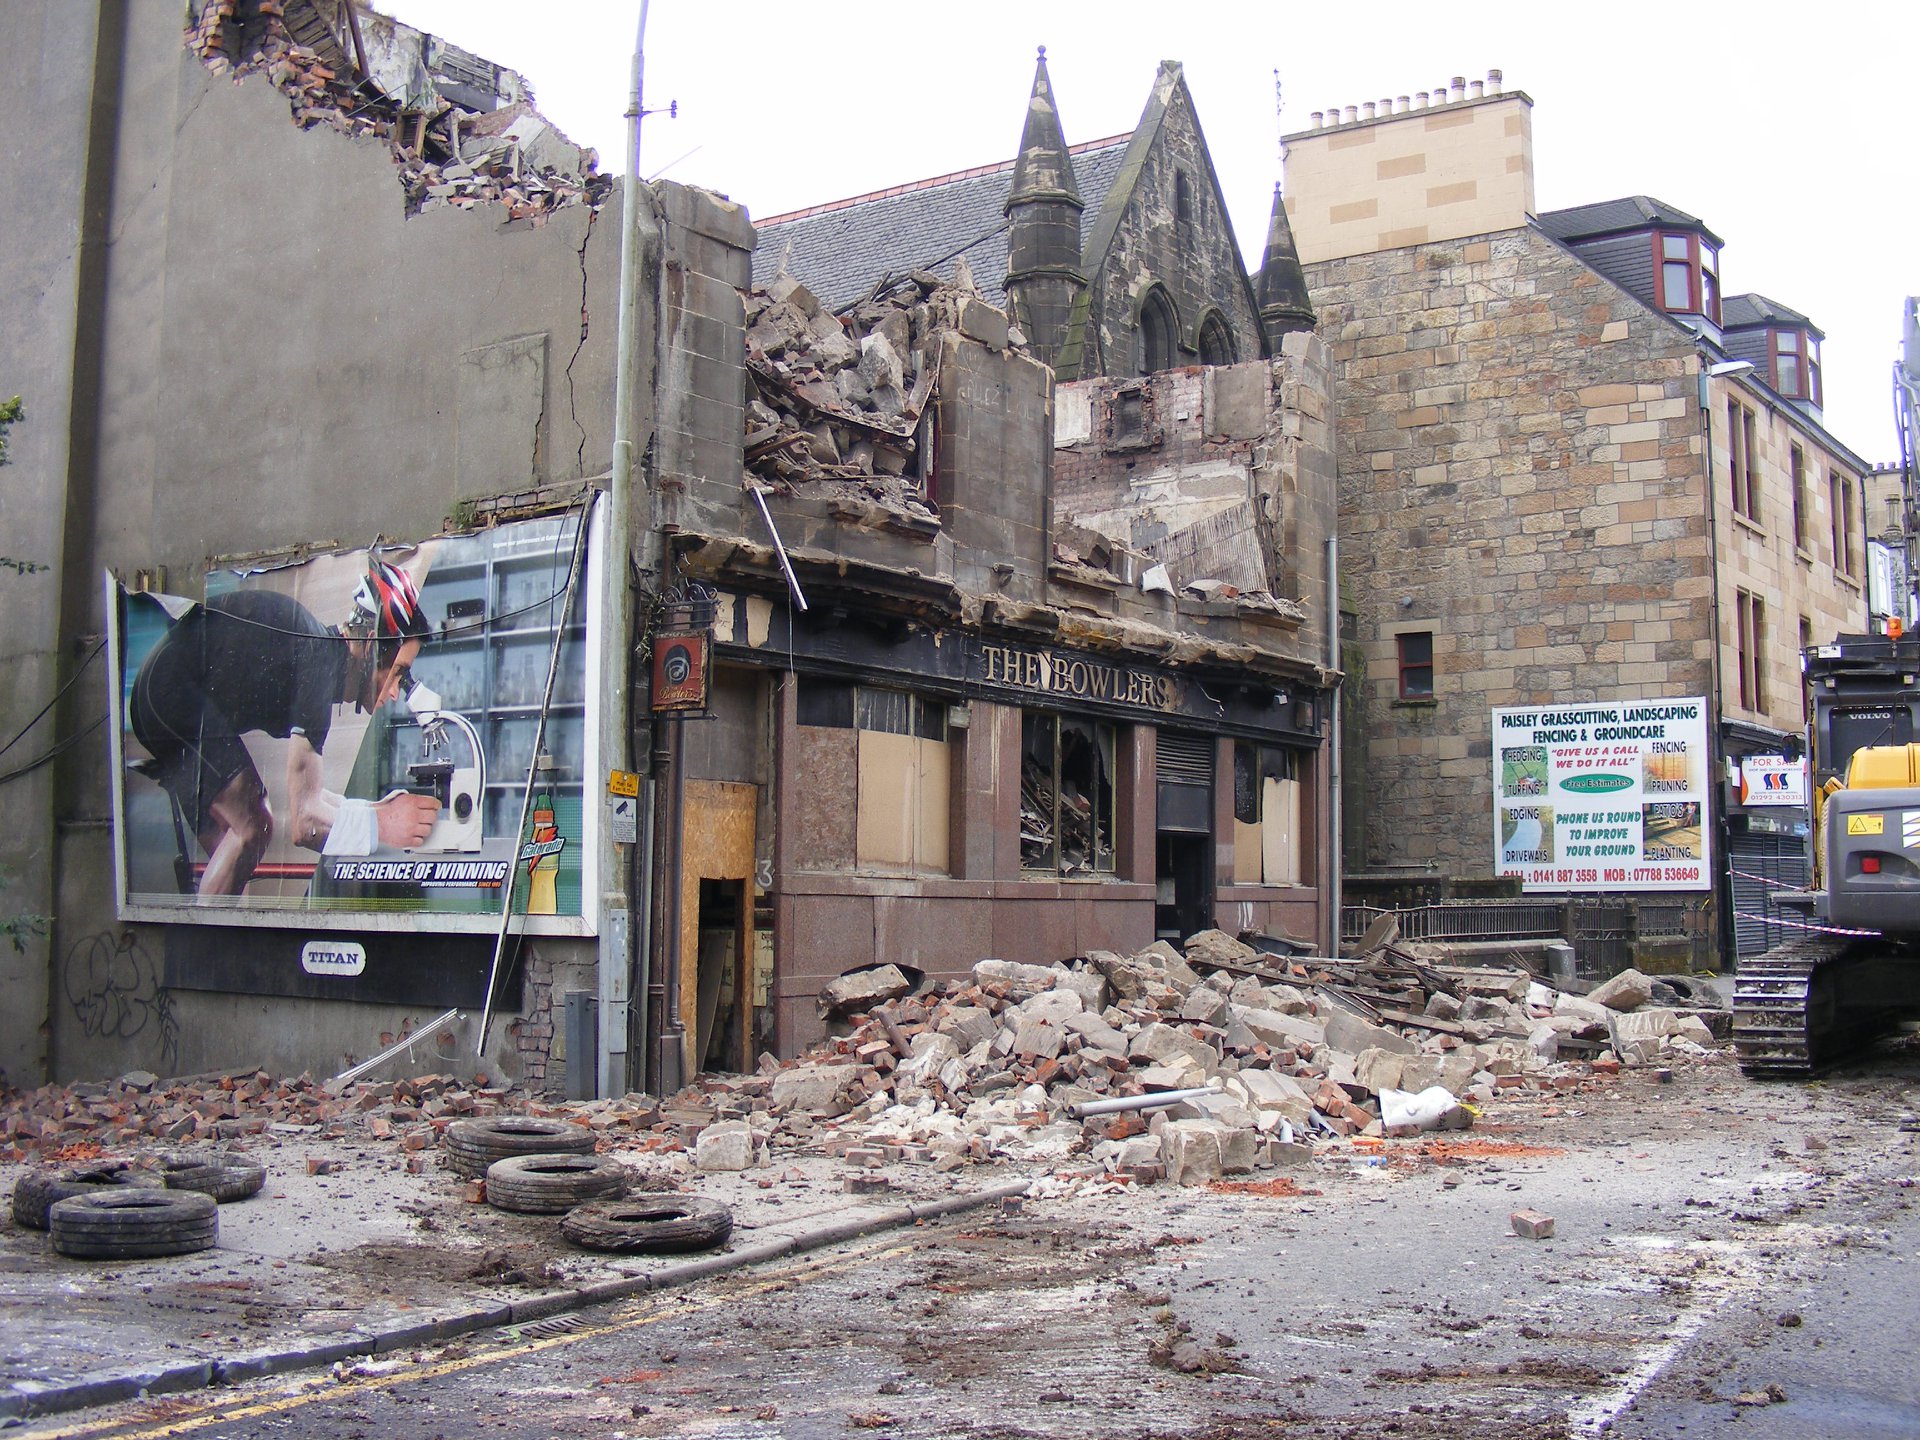 bowlers pub demolition